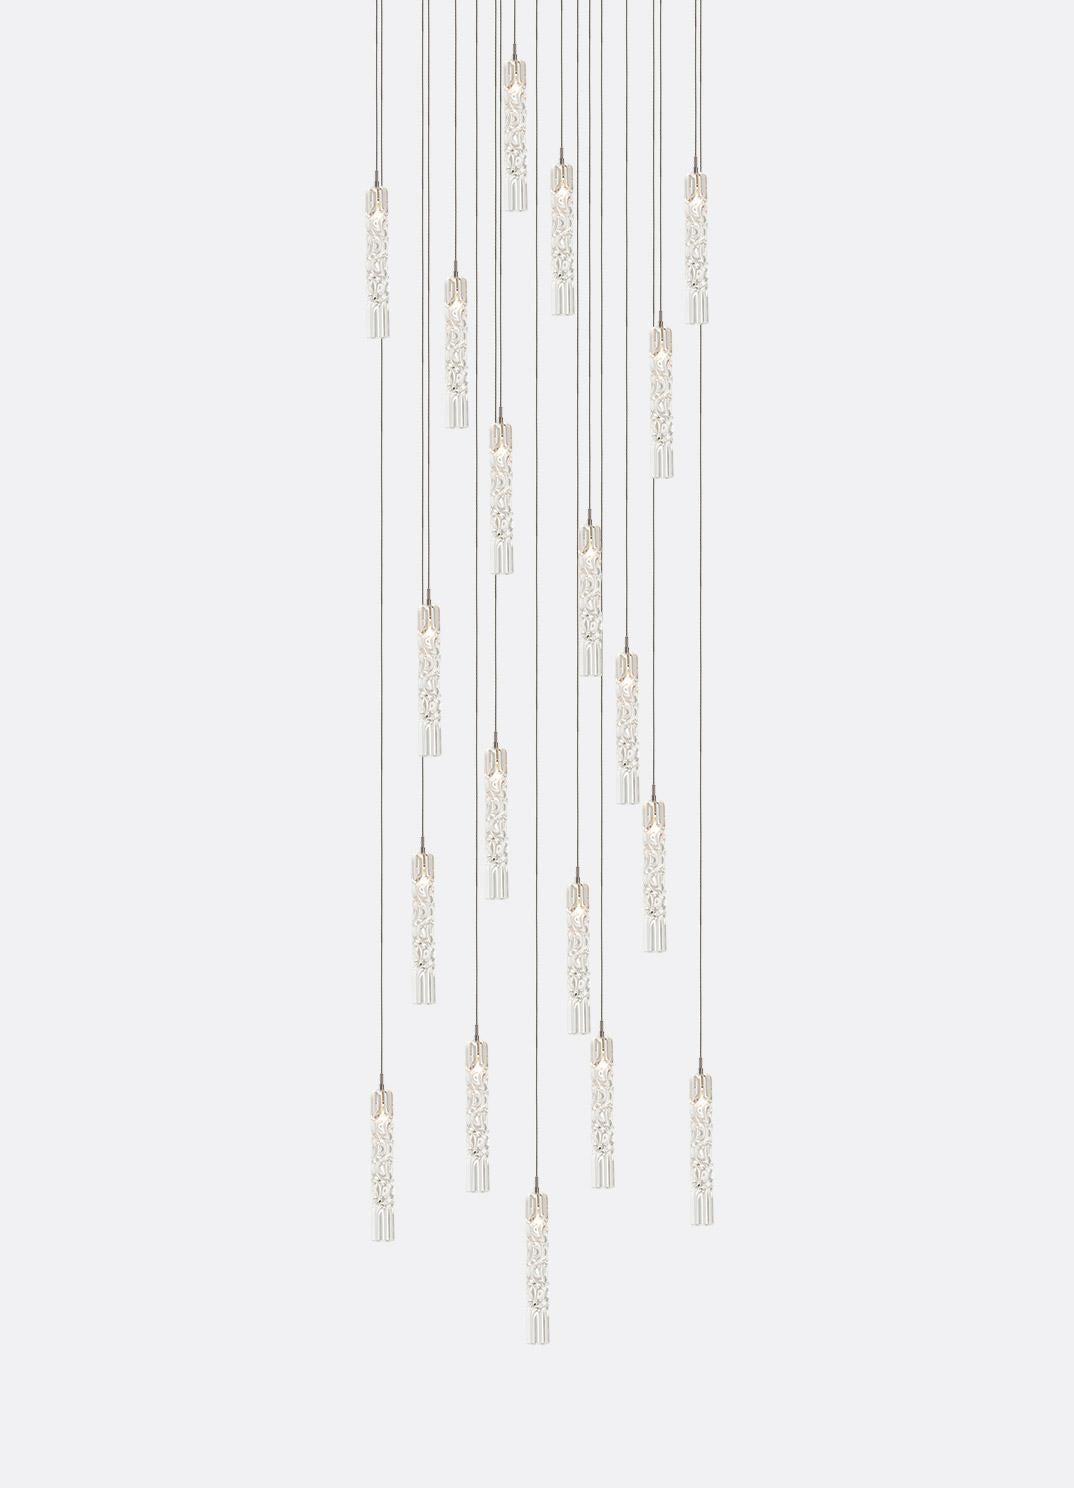 Hand blown glass pendants fixtures. 19 glass pendants on 30